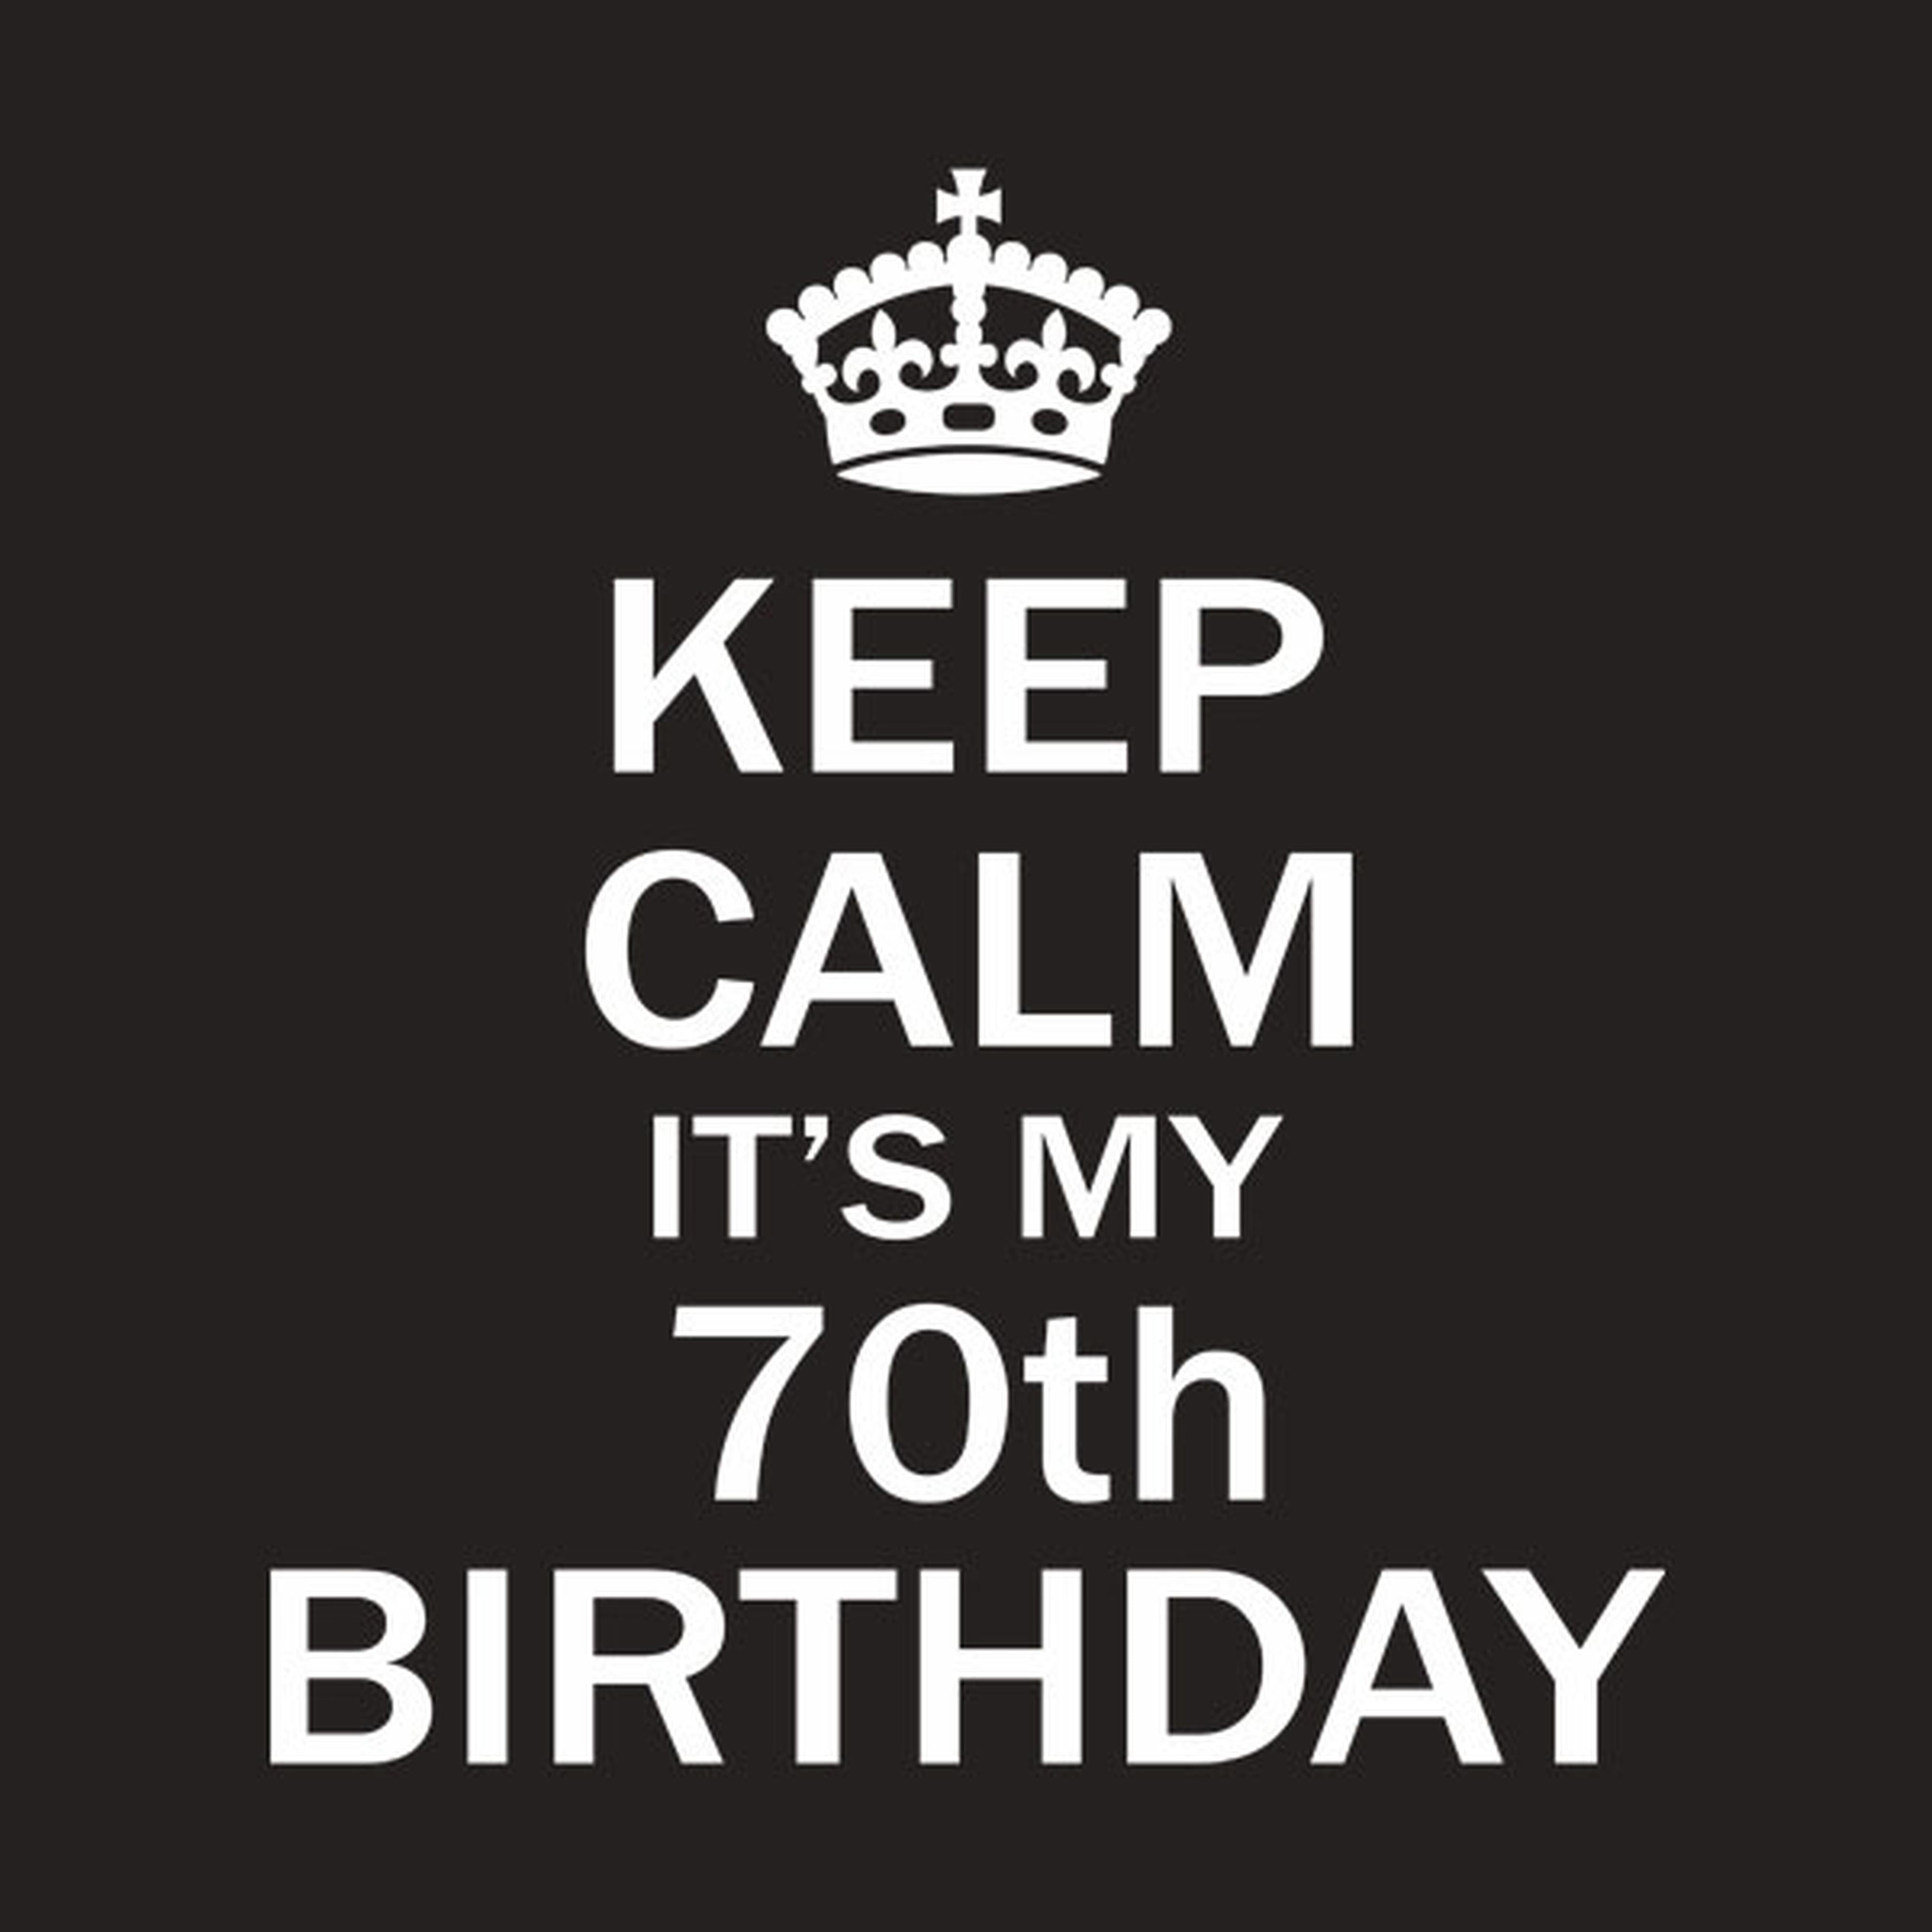 Keep calm it's my 70th birthday